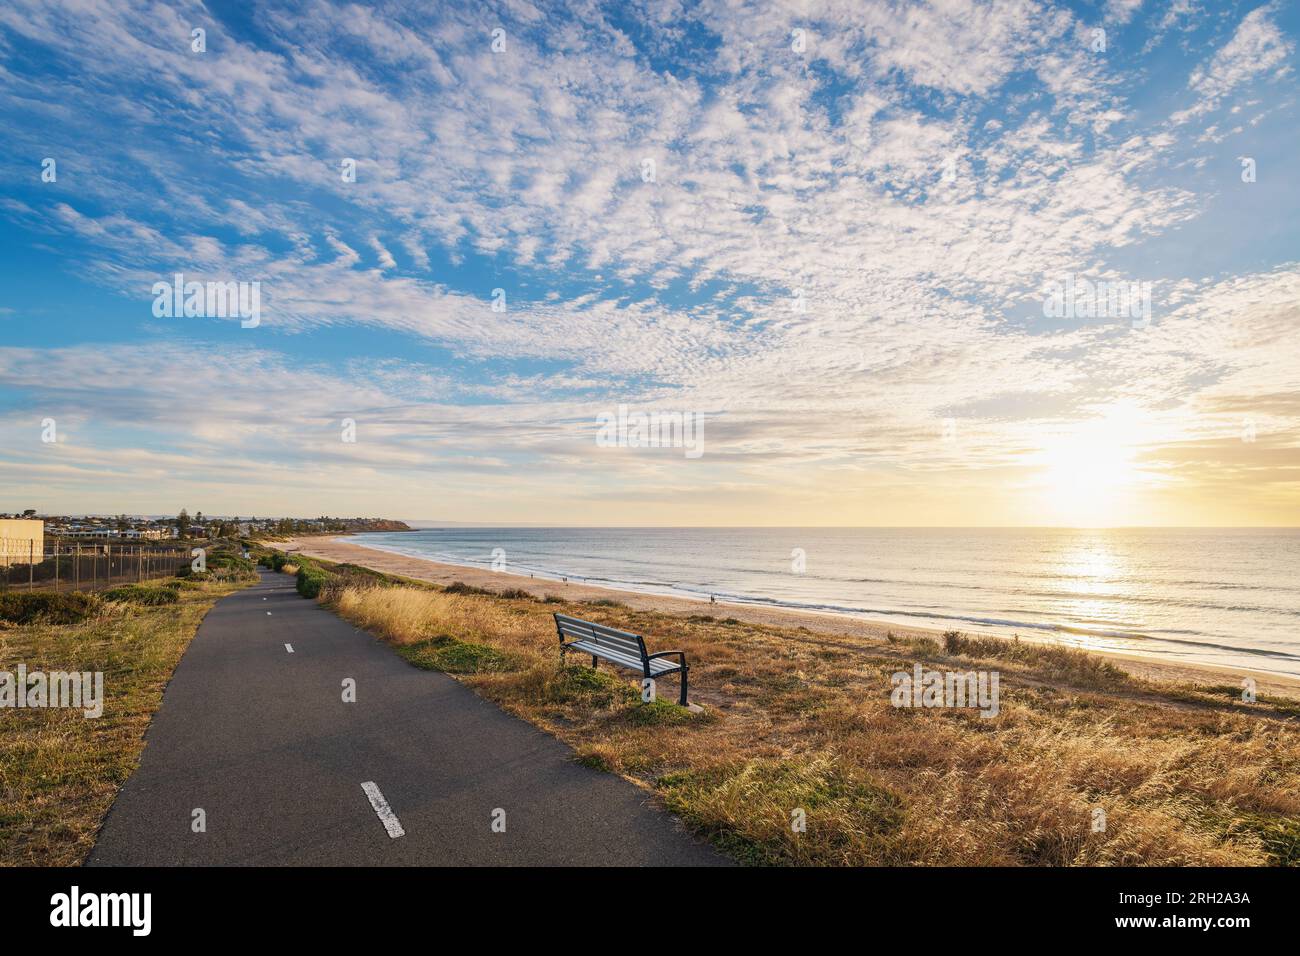 Bike lane with sea view along Christies Beach at sunset, South Australia Stock Photo